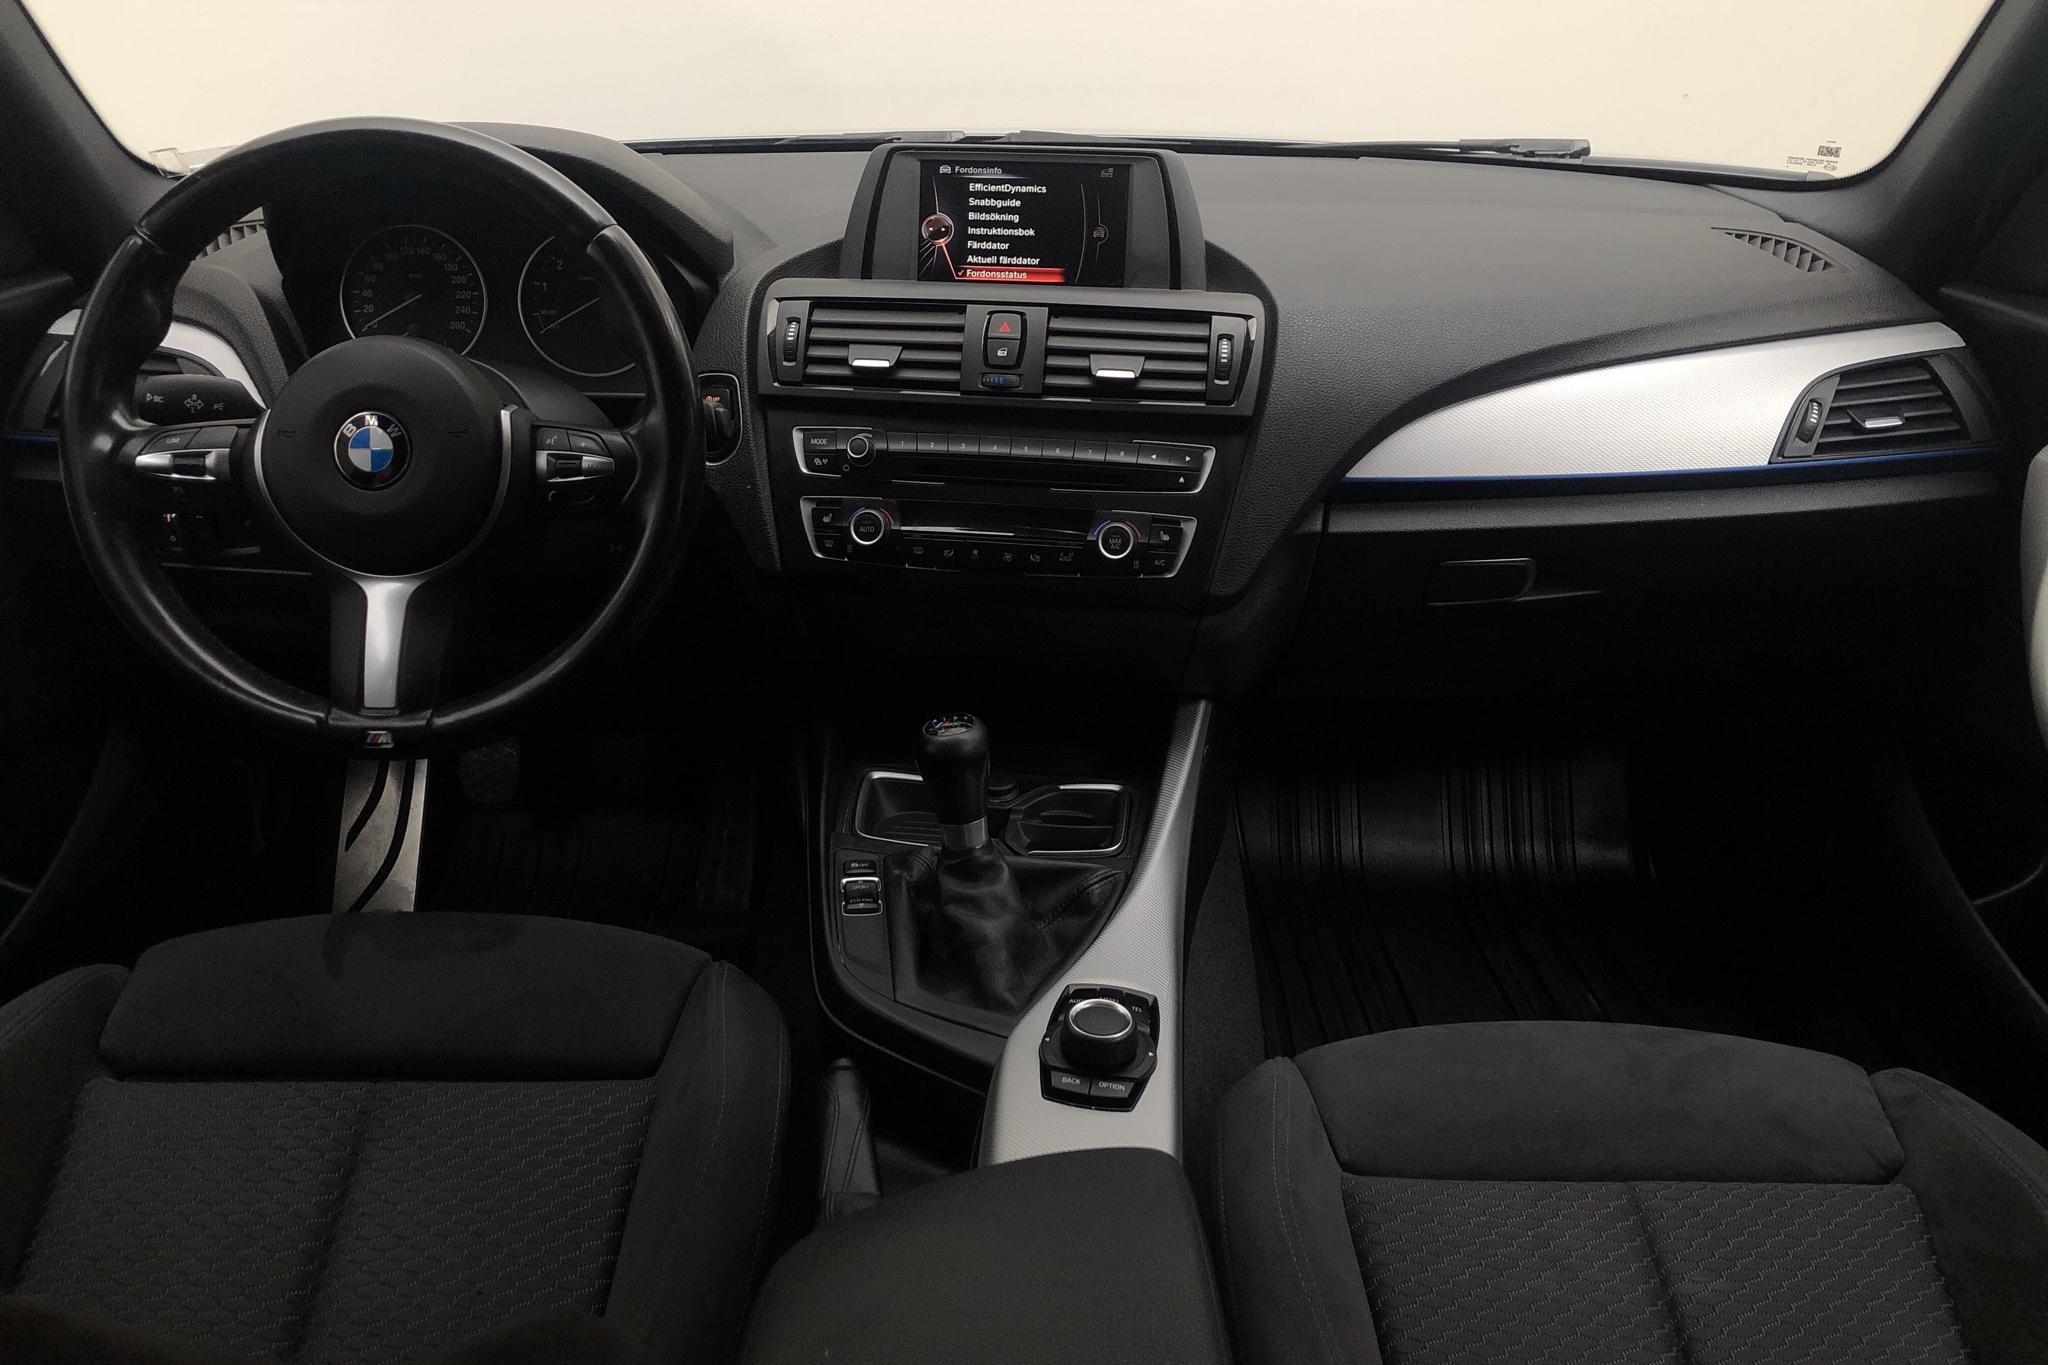 BMW 116i 5dr, F20 (136hk) - 177 240 km - Manual - gray - 2015